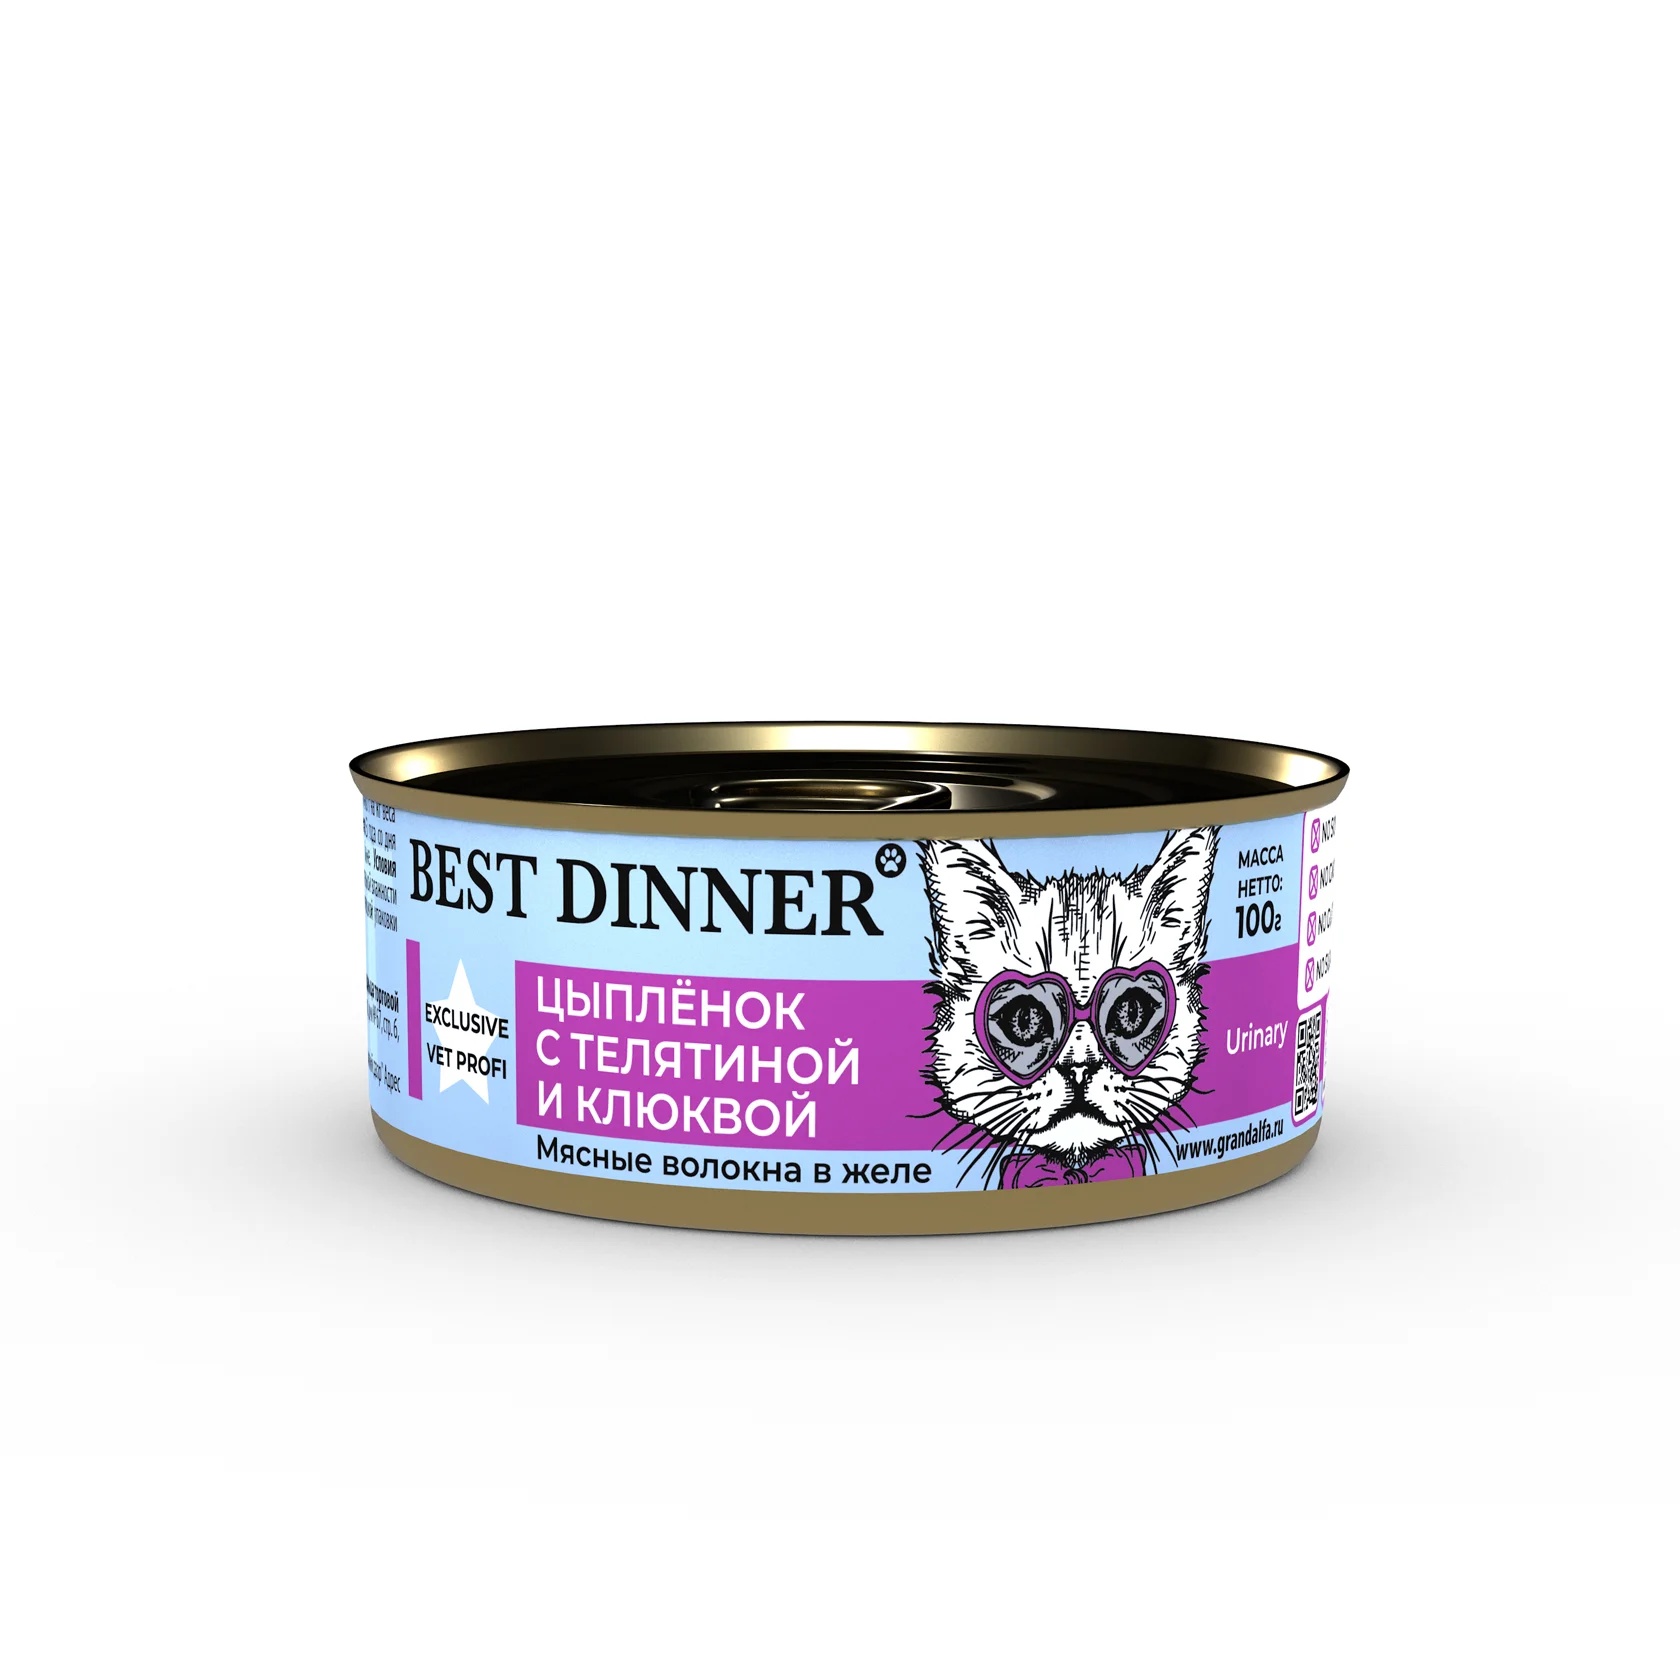 Best Dinner Exclusive Vet Profi Urinary Цыпленок/Телятина/клюква паштет конс для кошек 100 г